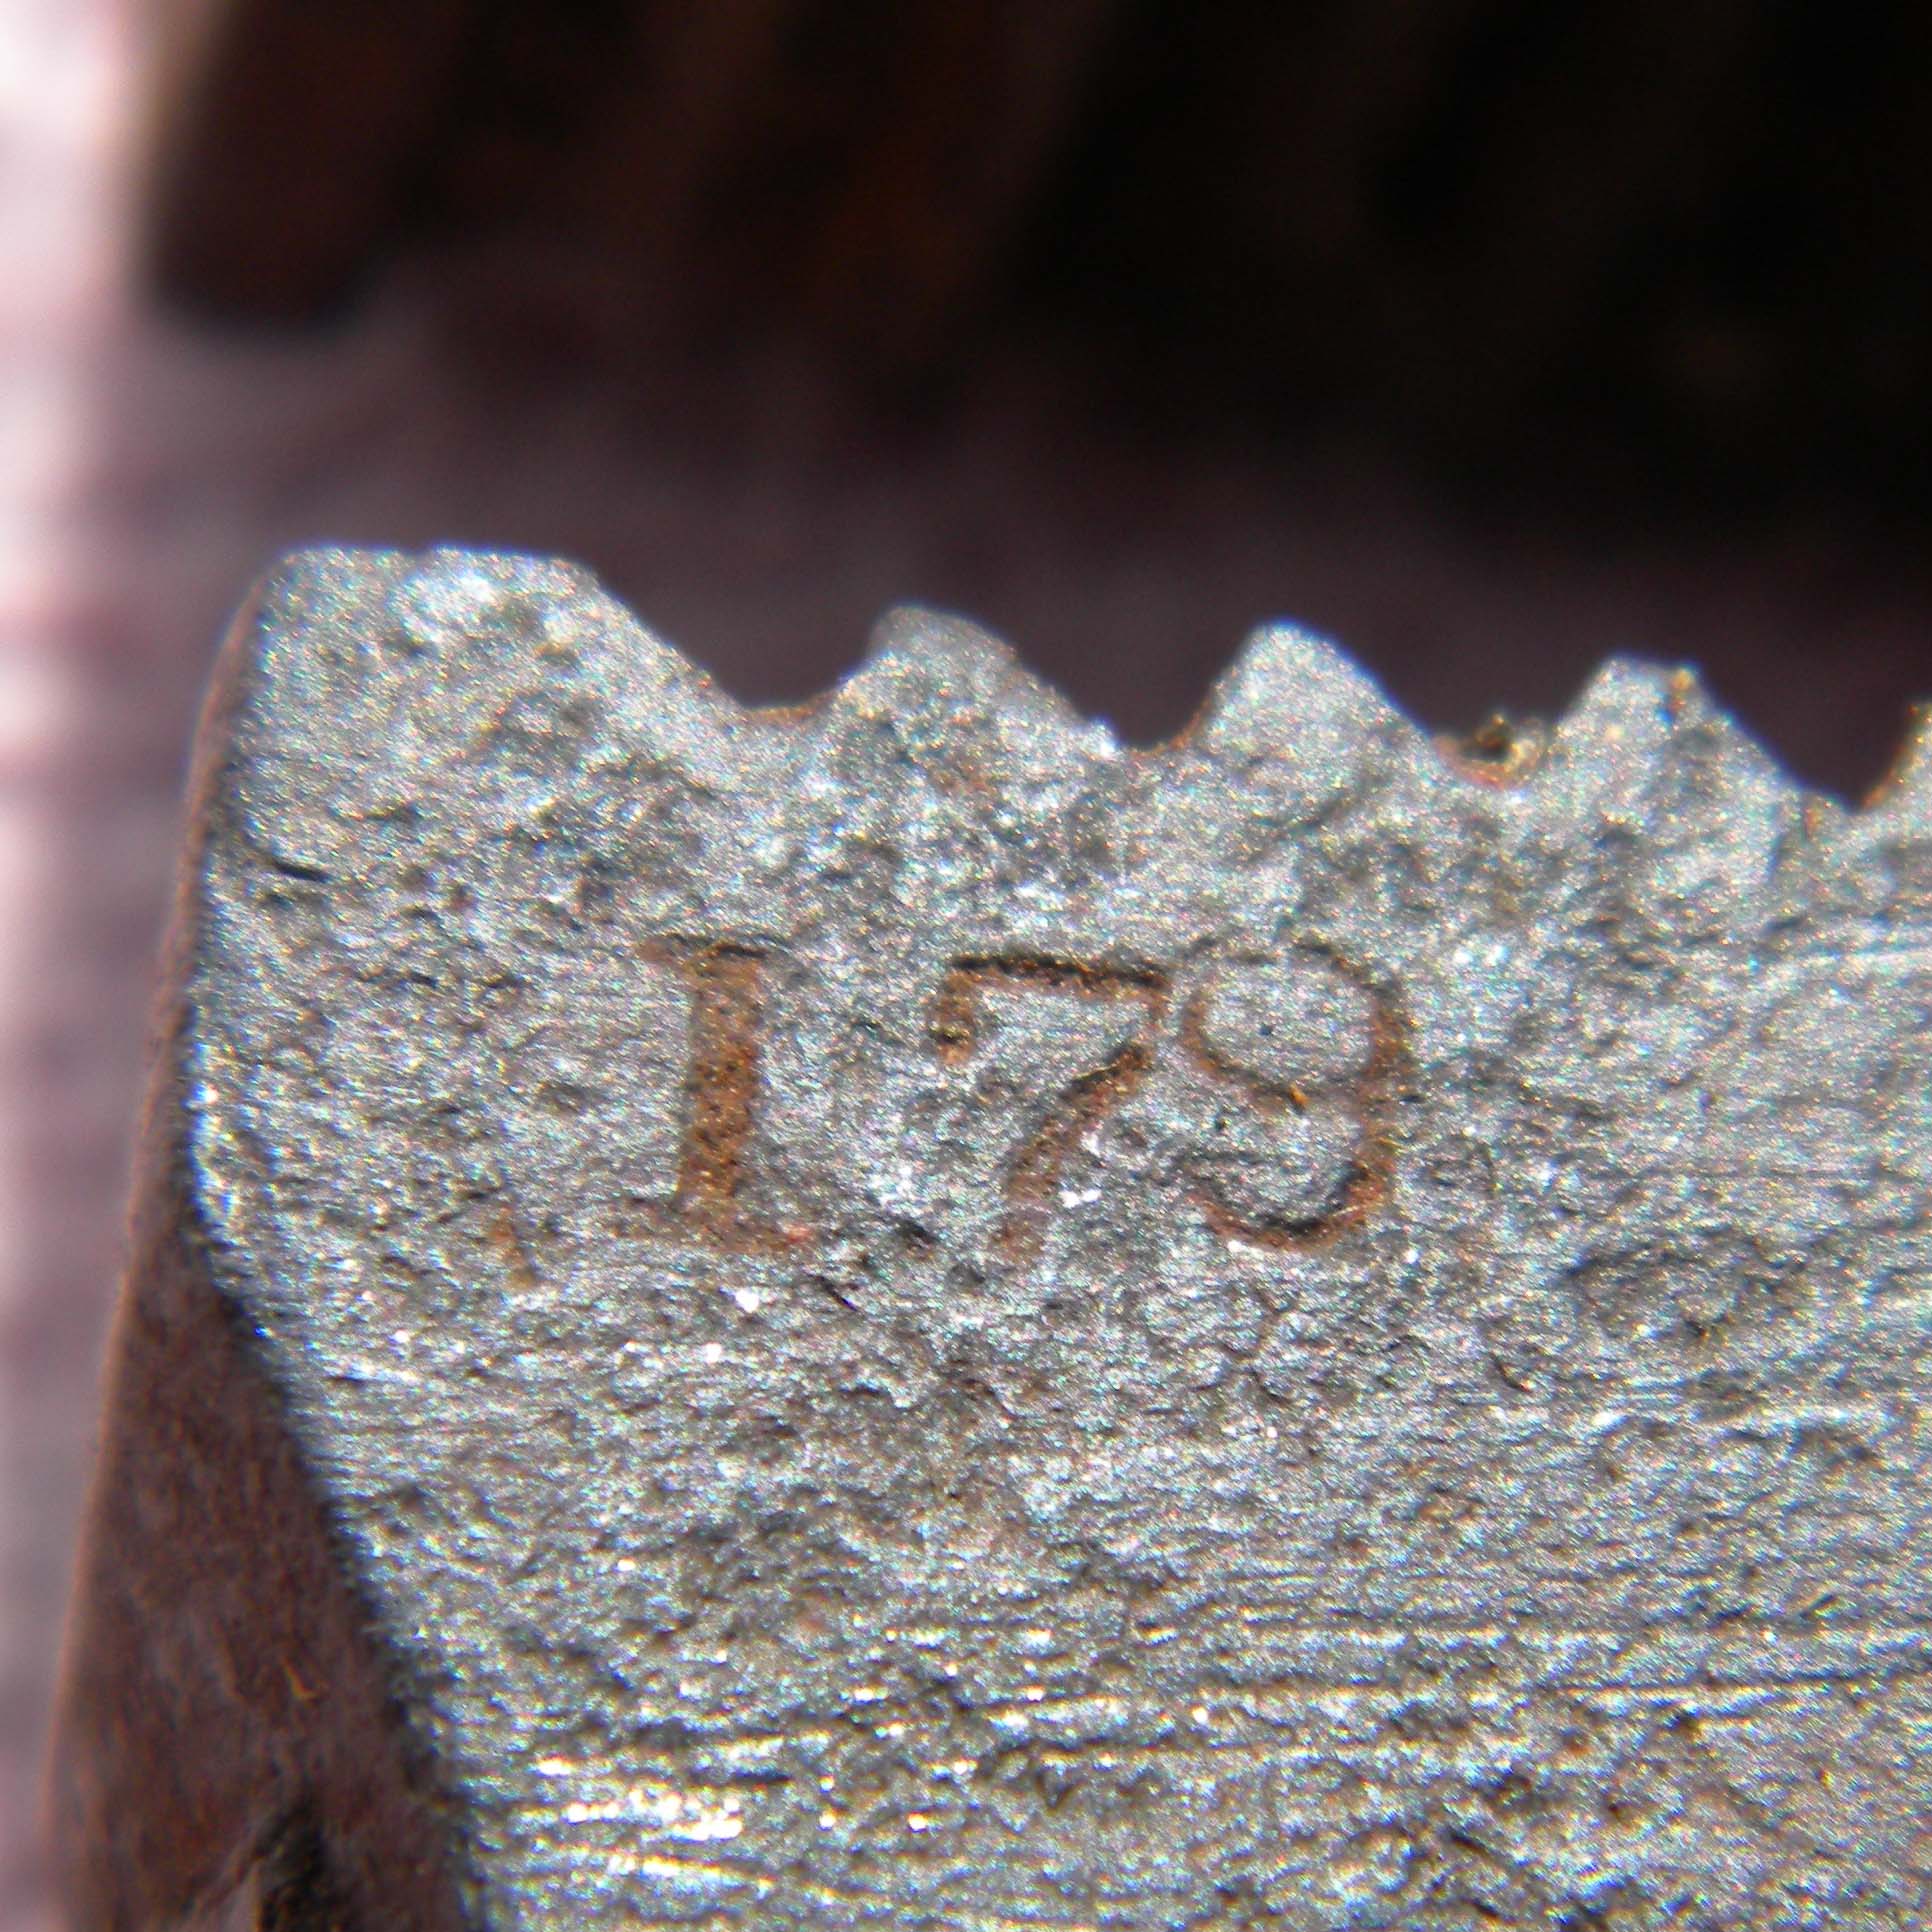 DSCN1149 No. on Wrench1.jpg